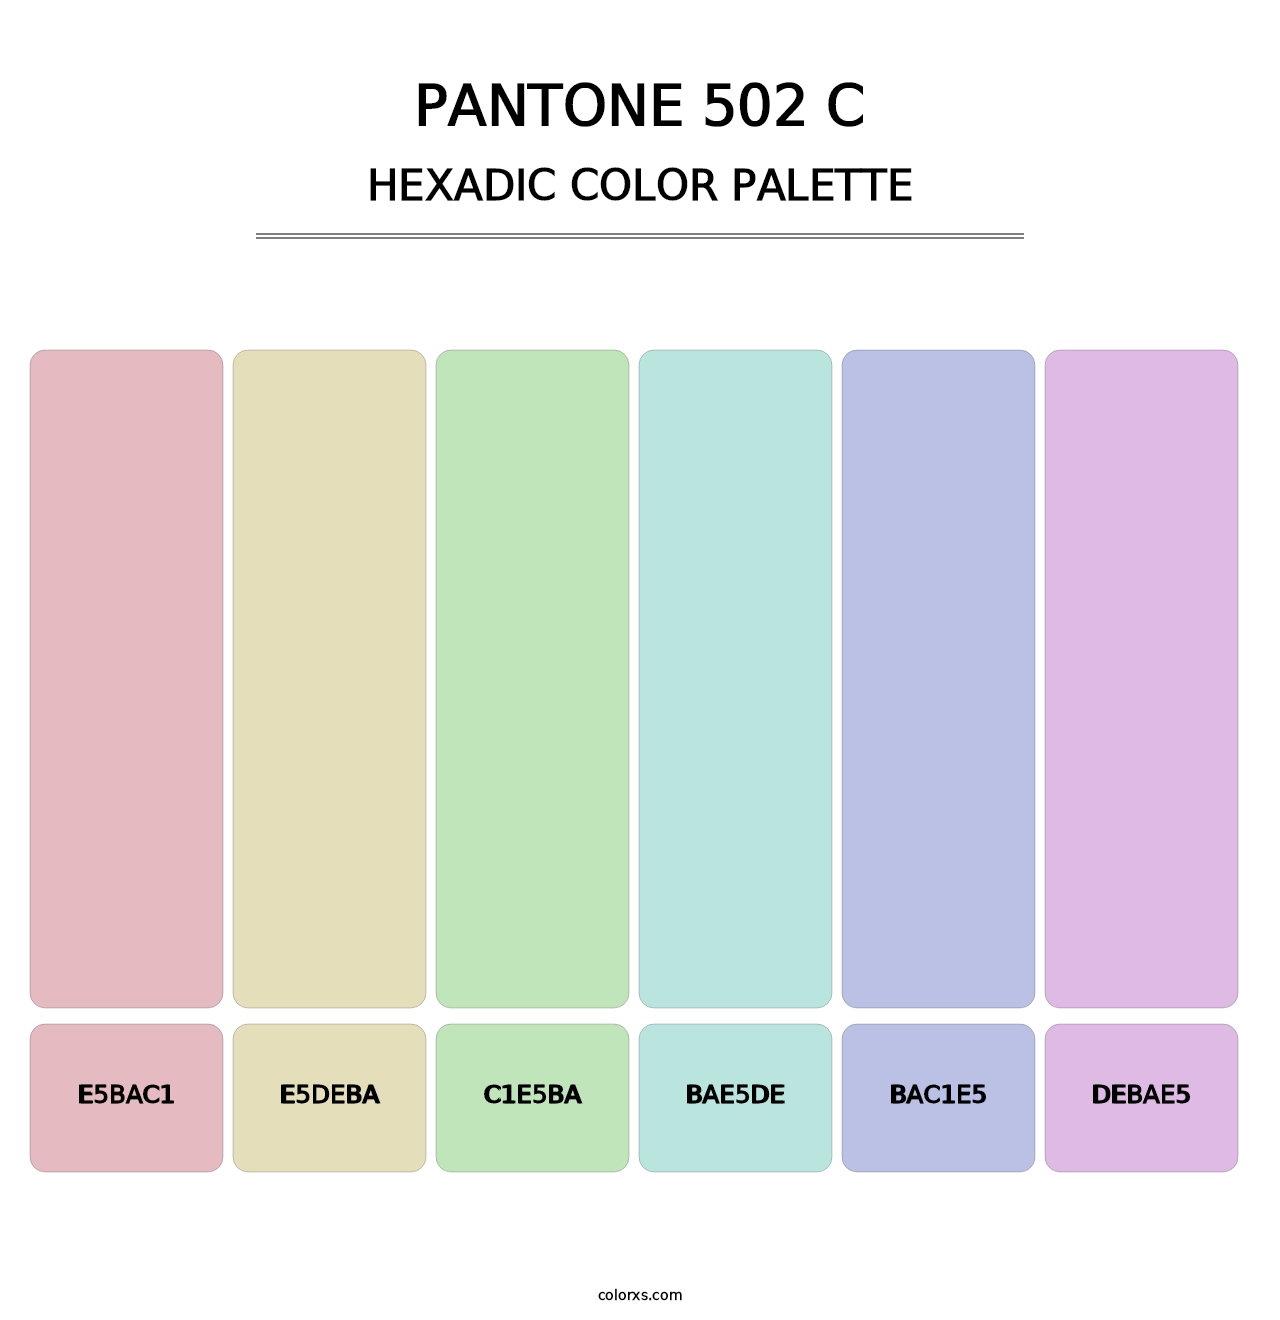 PANTONE 502 C - Hexadic Color Palette